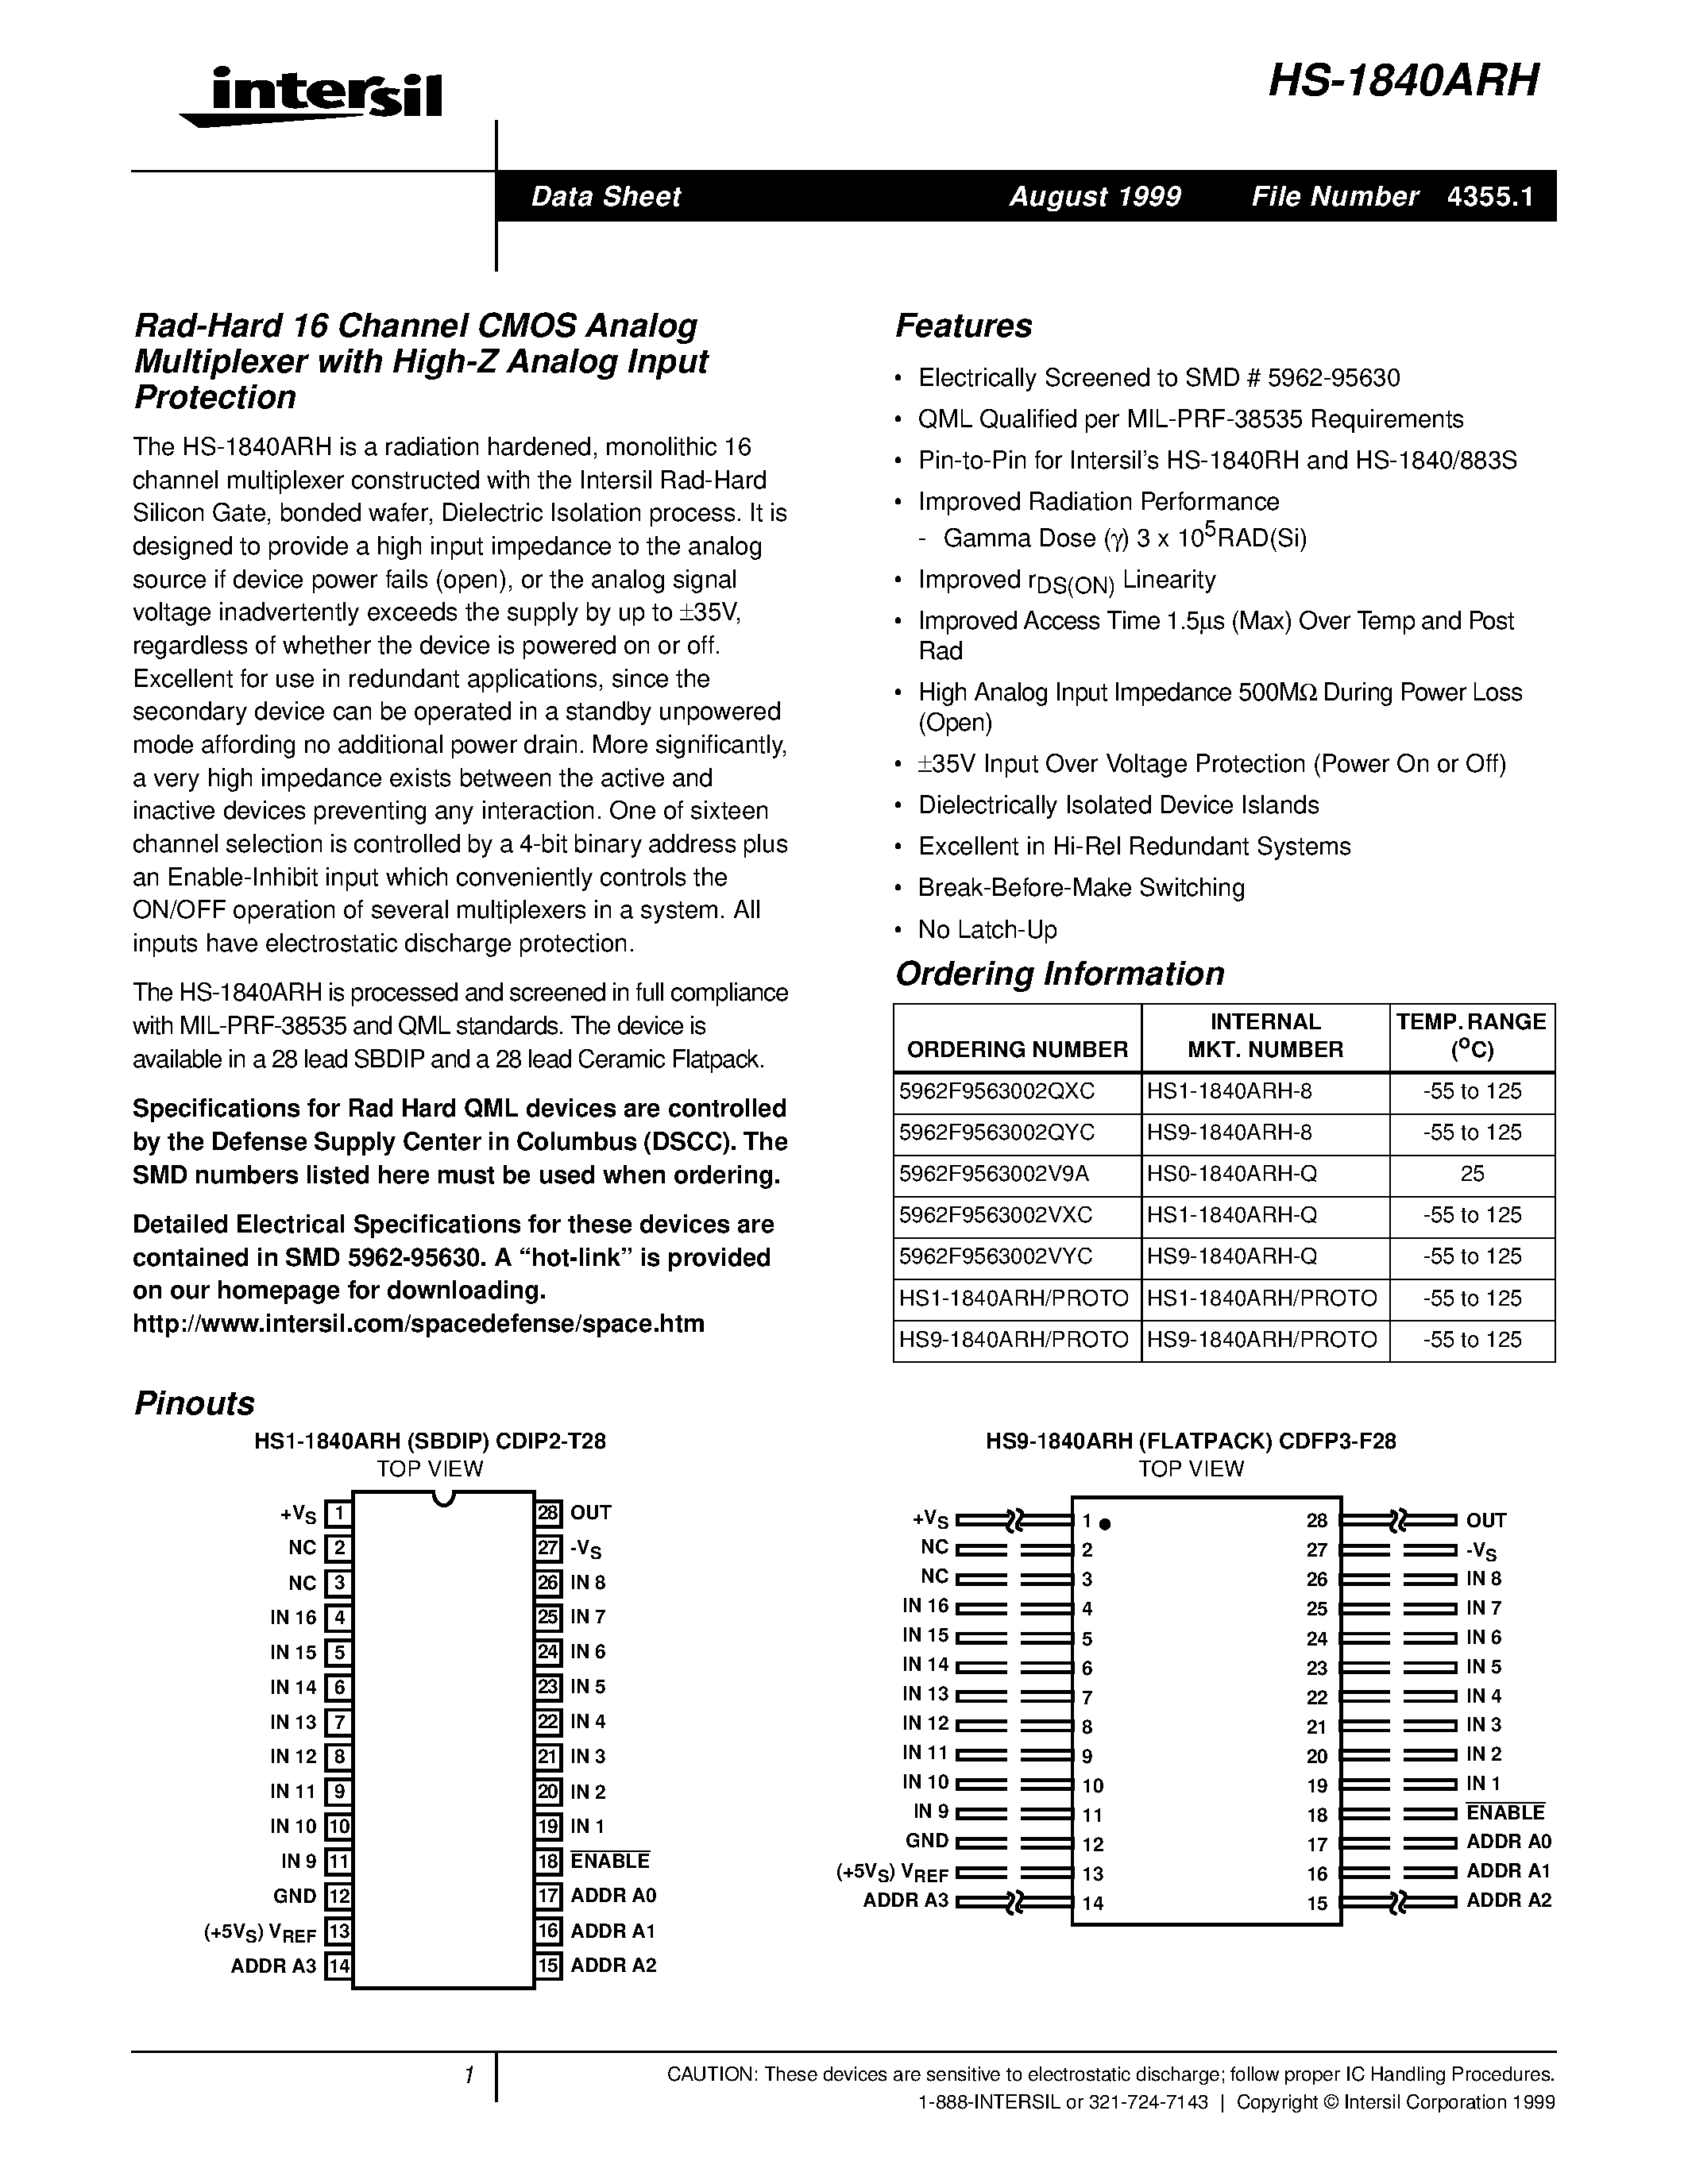 Даташит HS1-1840ARH-Q - Rad-Hard 16 Channel CMOS Analog Multiplexer with High-Z Analog Input Protection страница 1